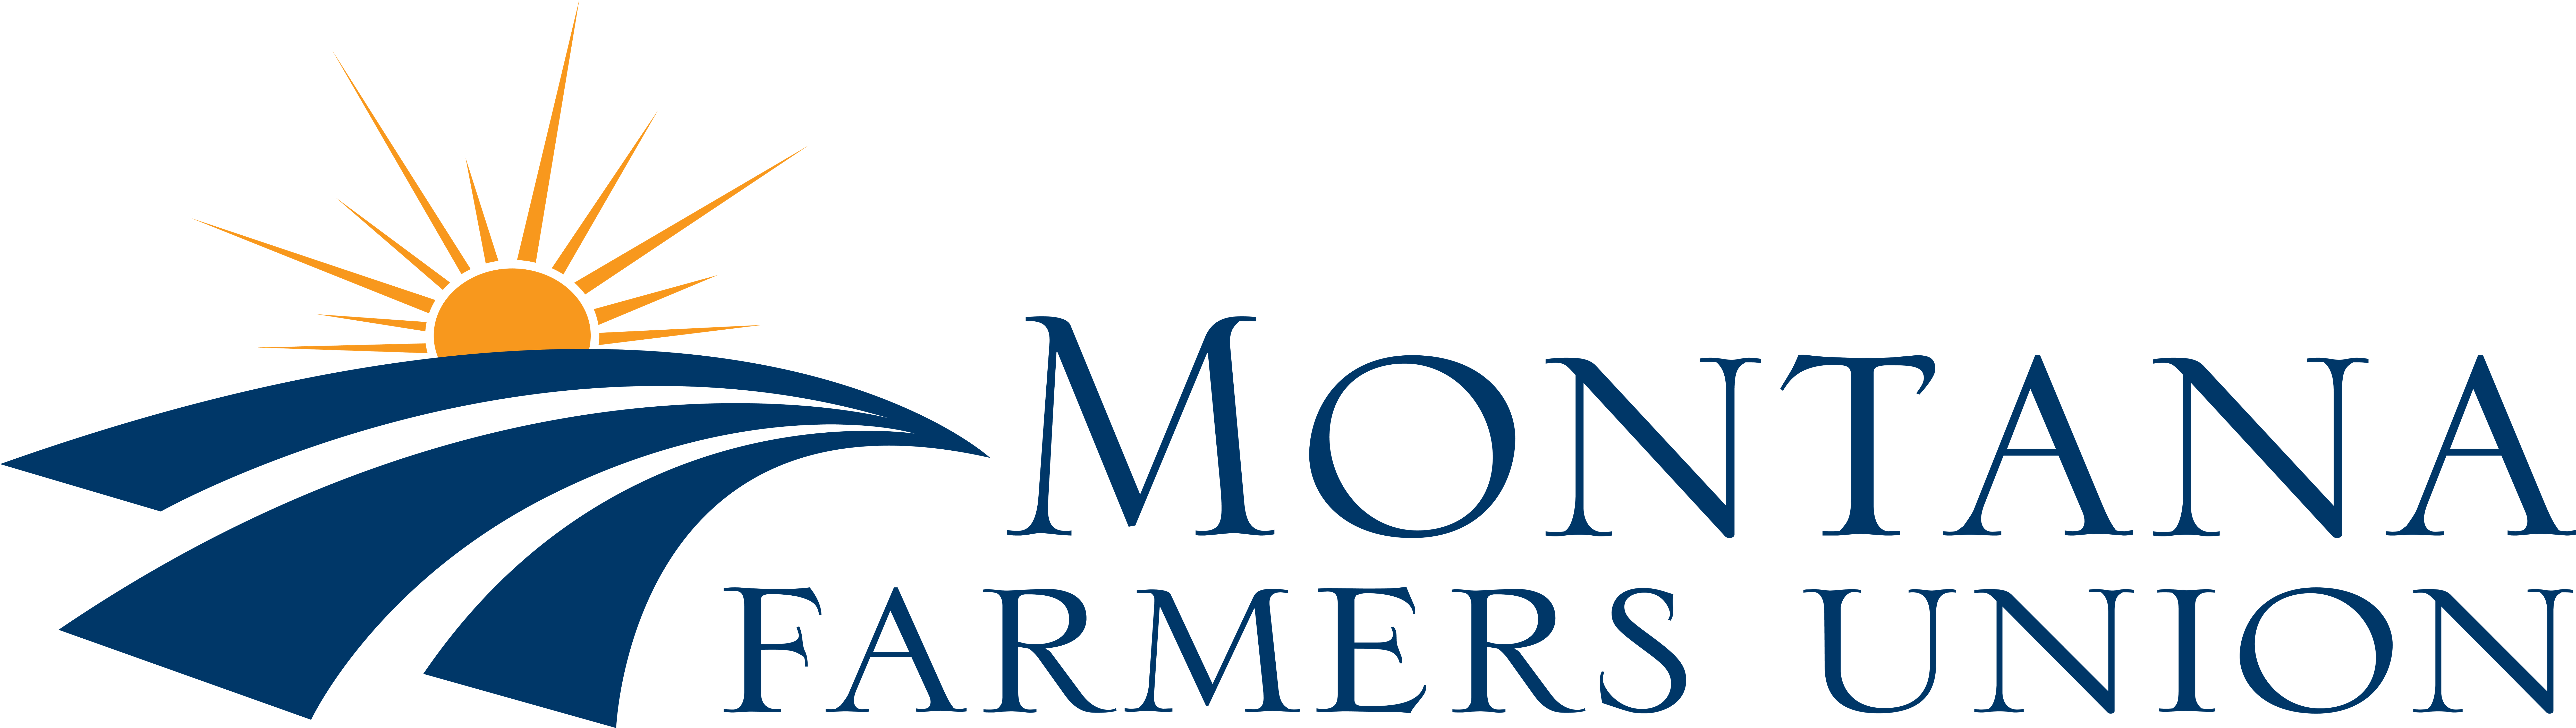 Montana Farmer's Union